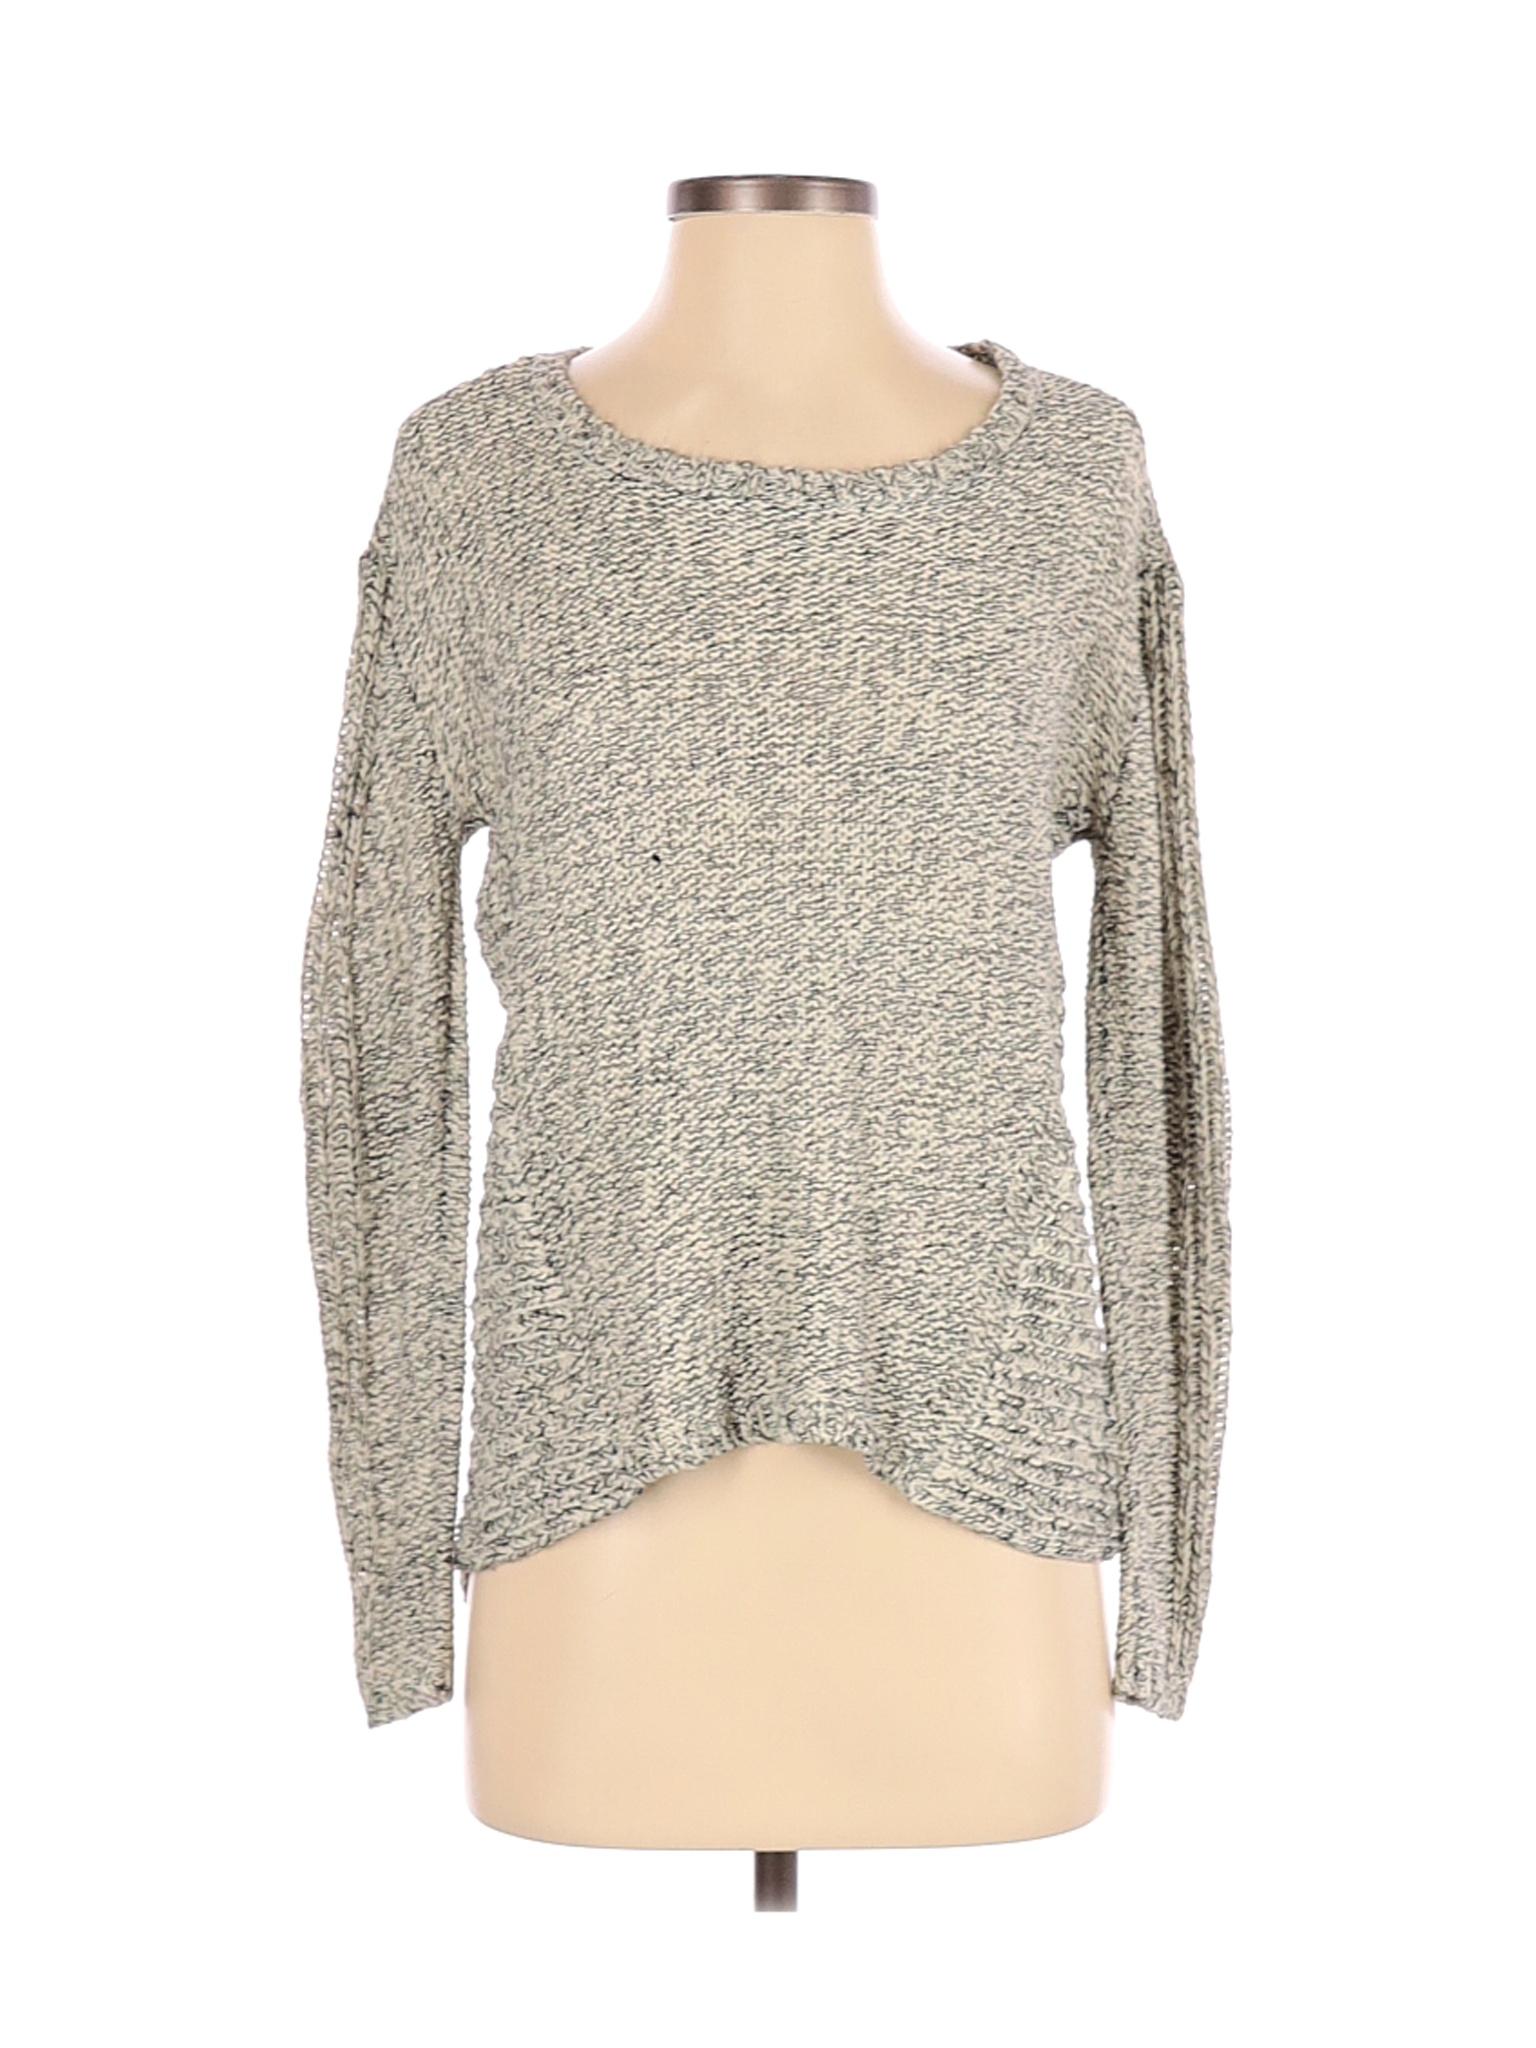 Retrod Women Gray Pullover Sweater S | eBay